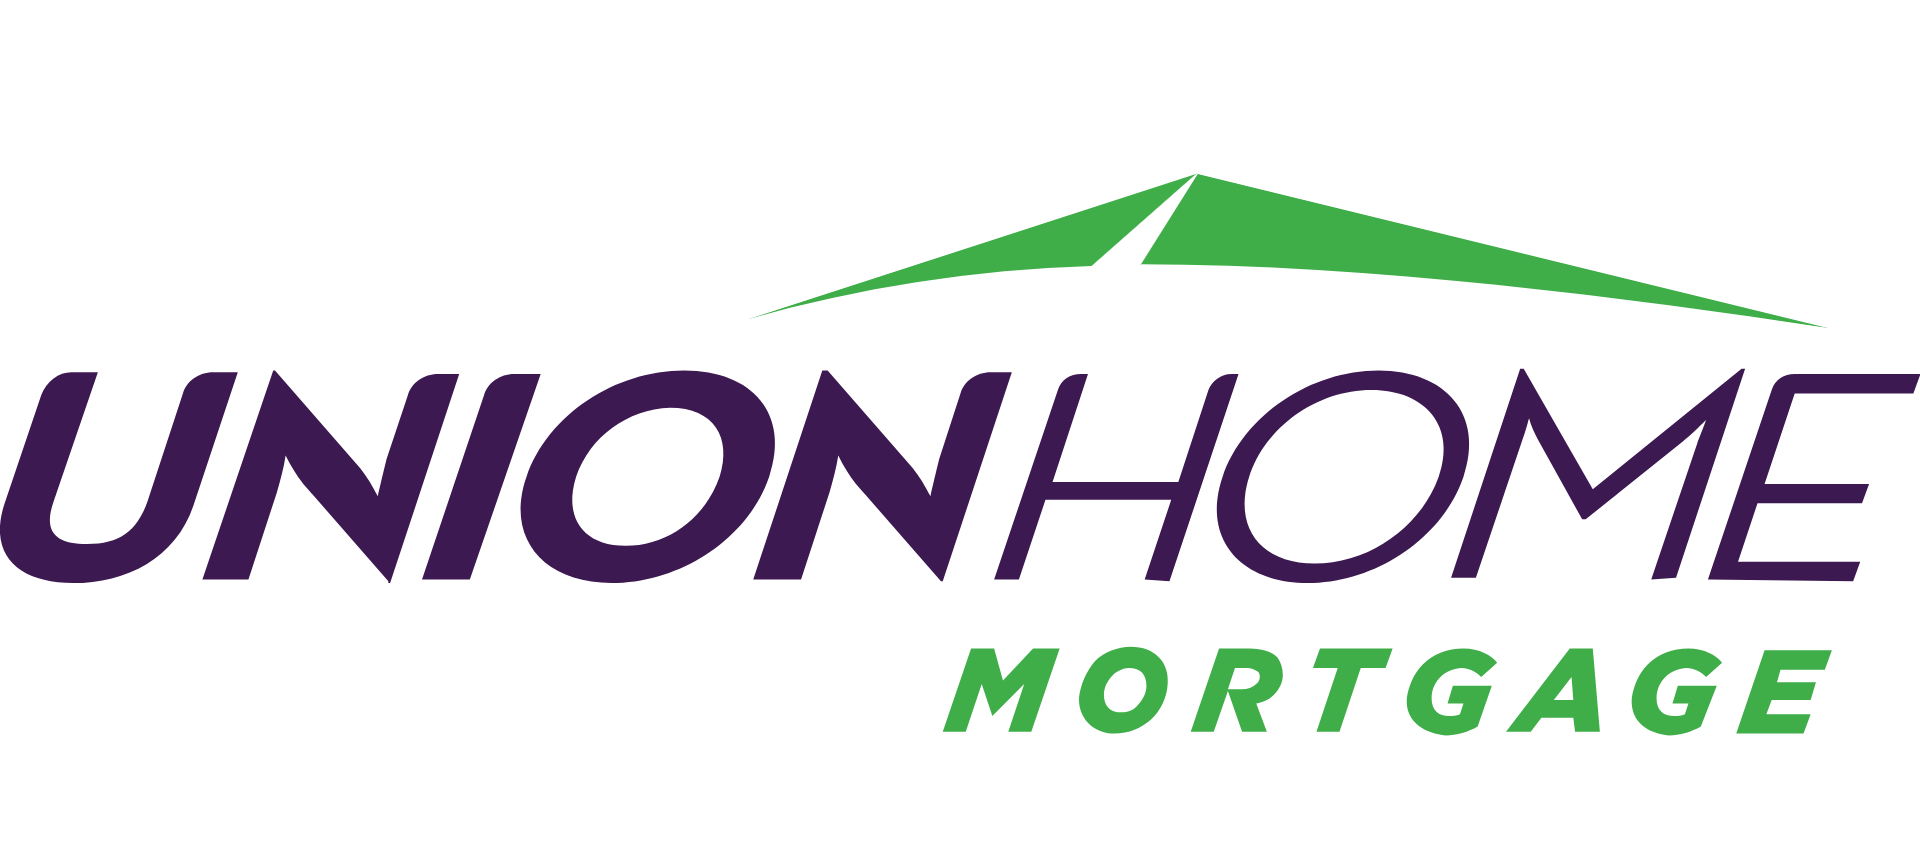 union home mortgage